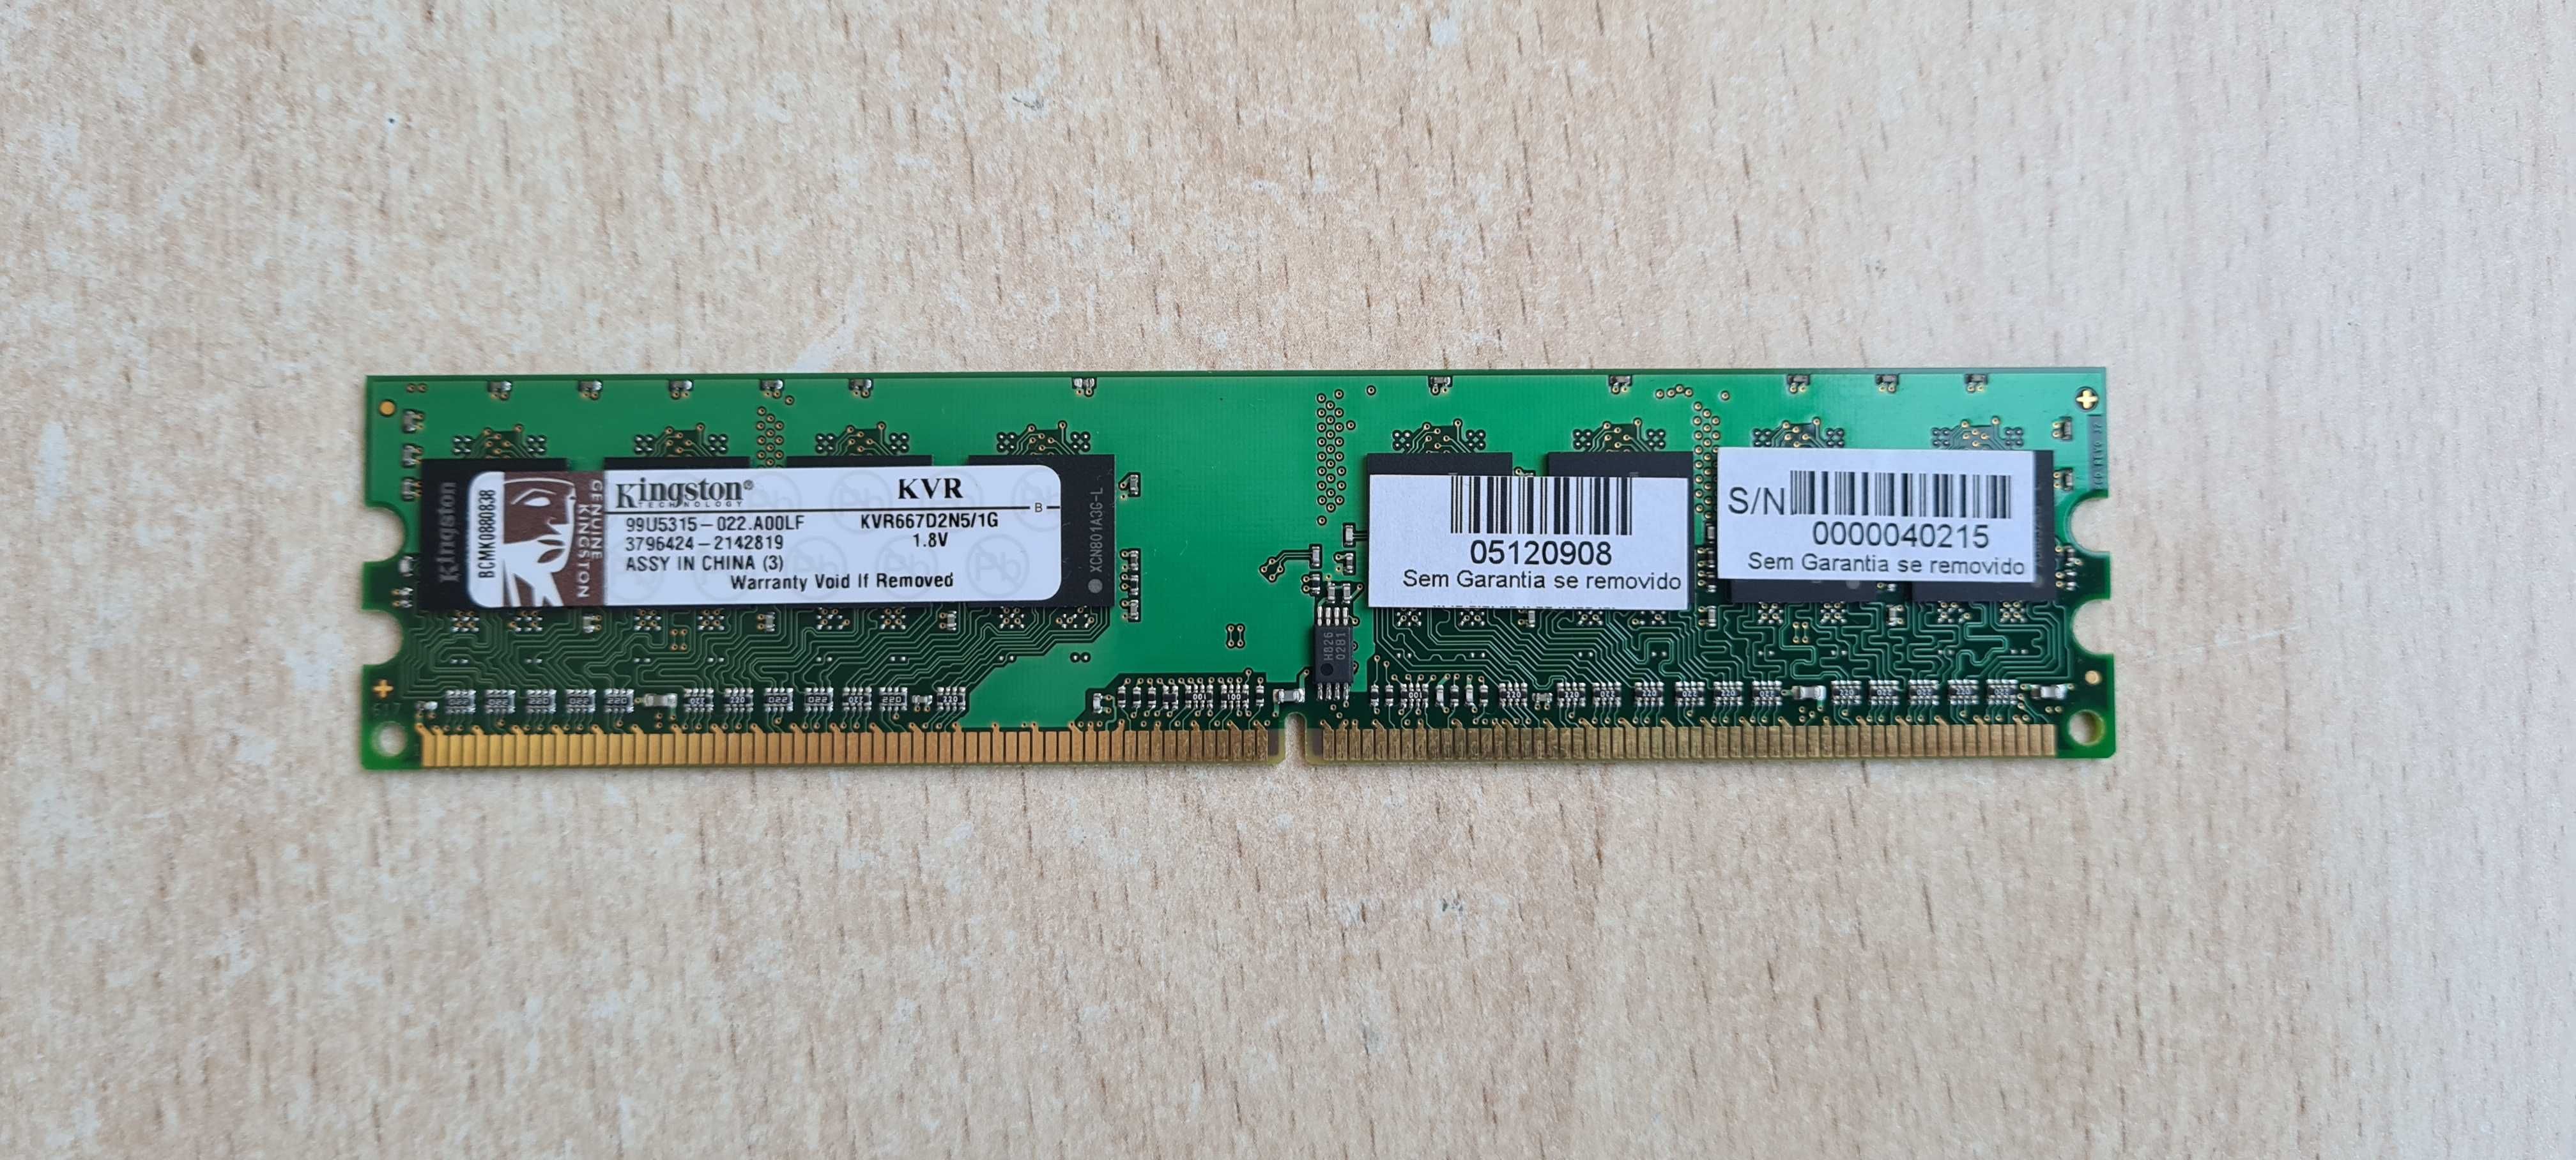 Memórias RAM Kingston 1GBx4 DDR2 667MHz